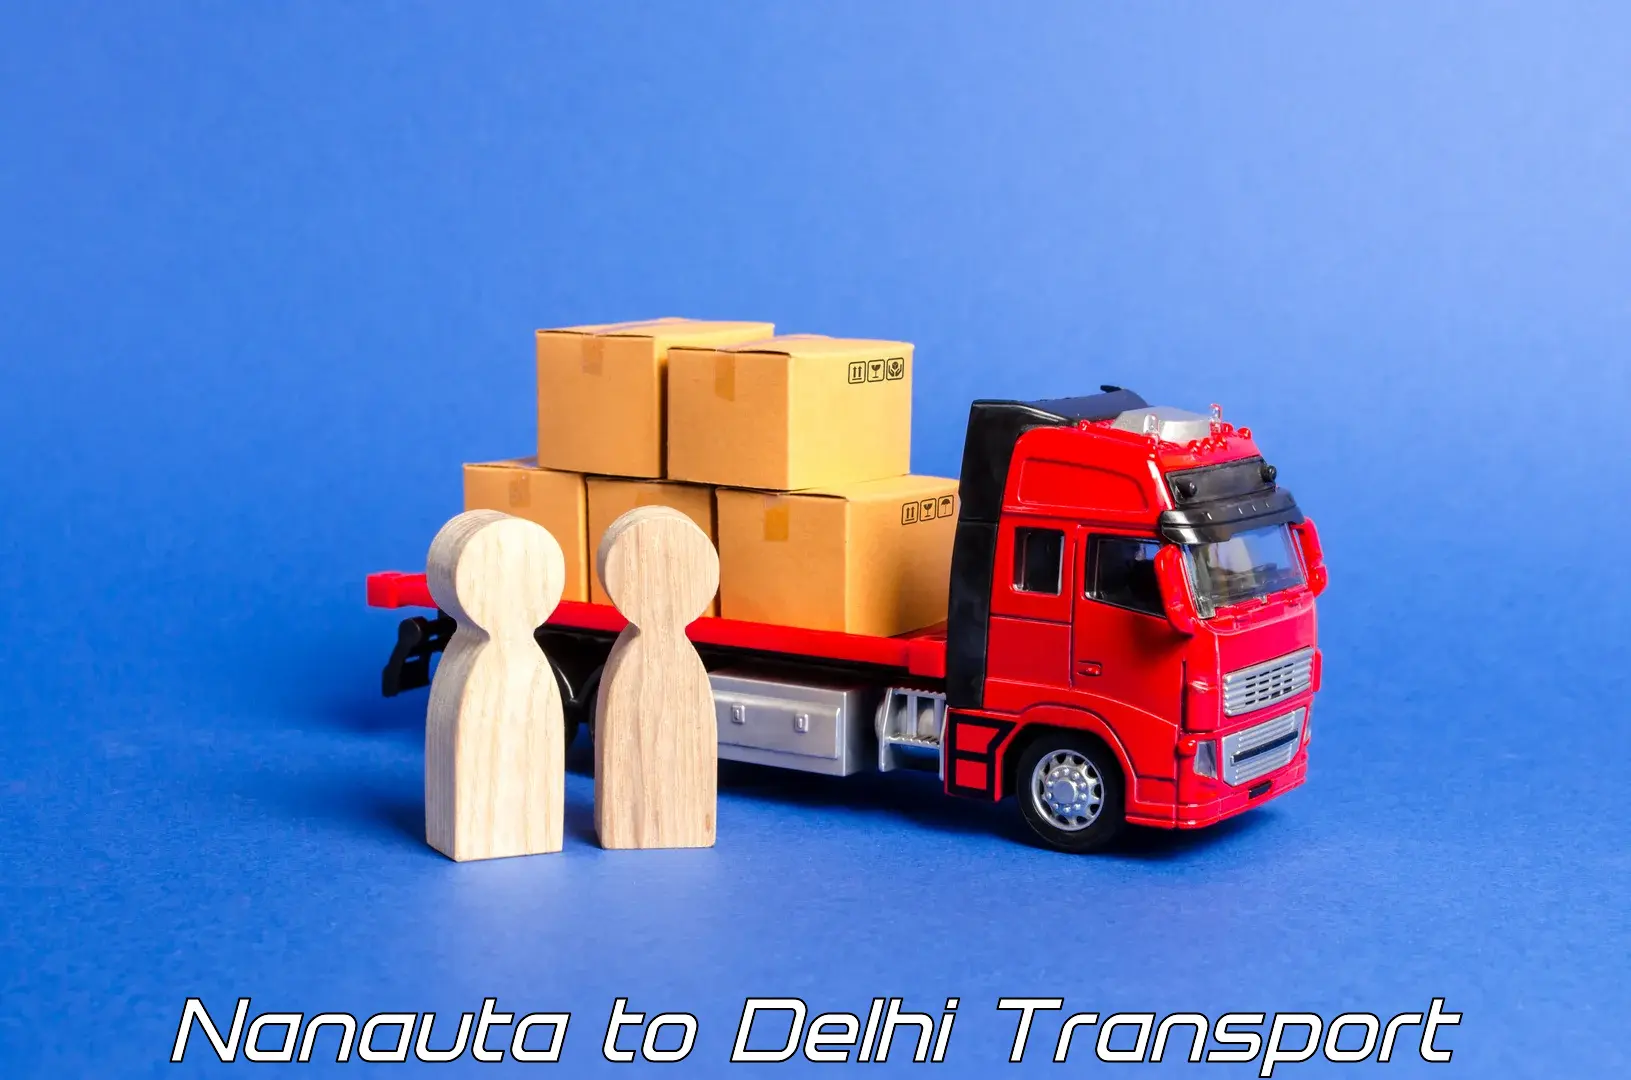 Lorry transport service Nanauta to University of Delhi